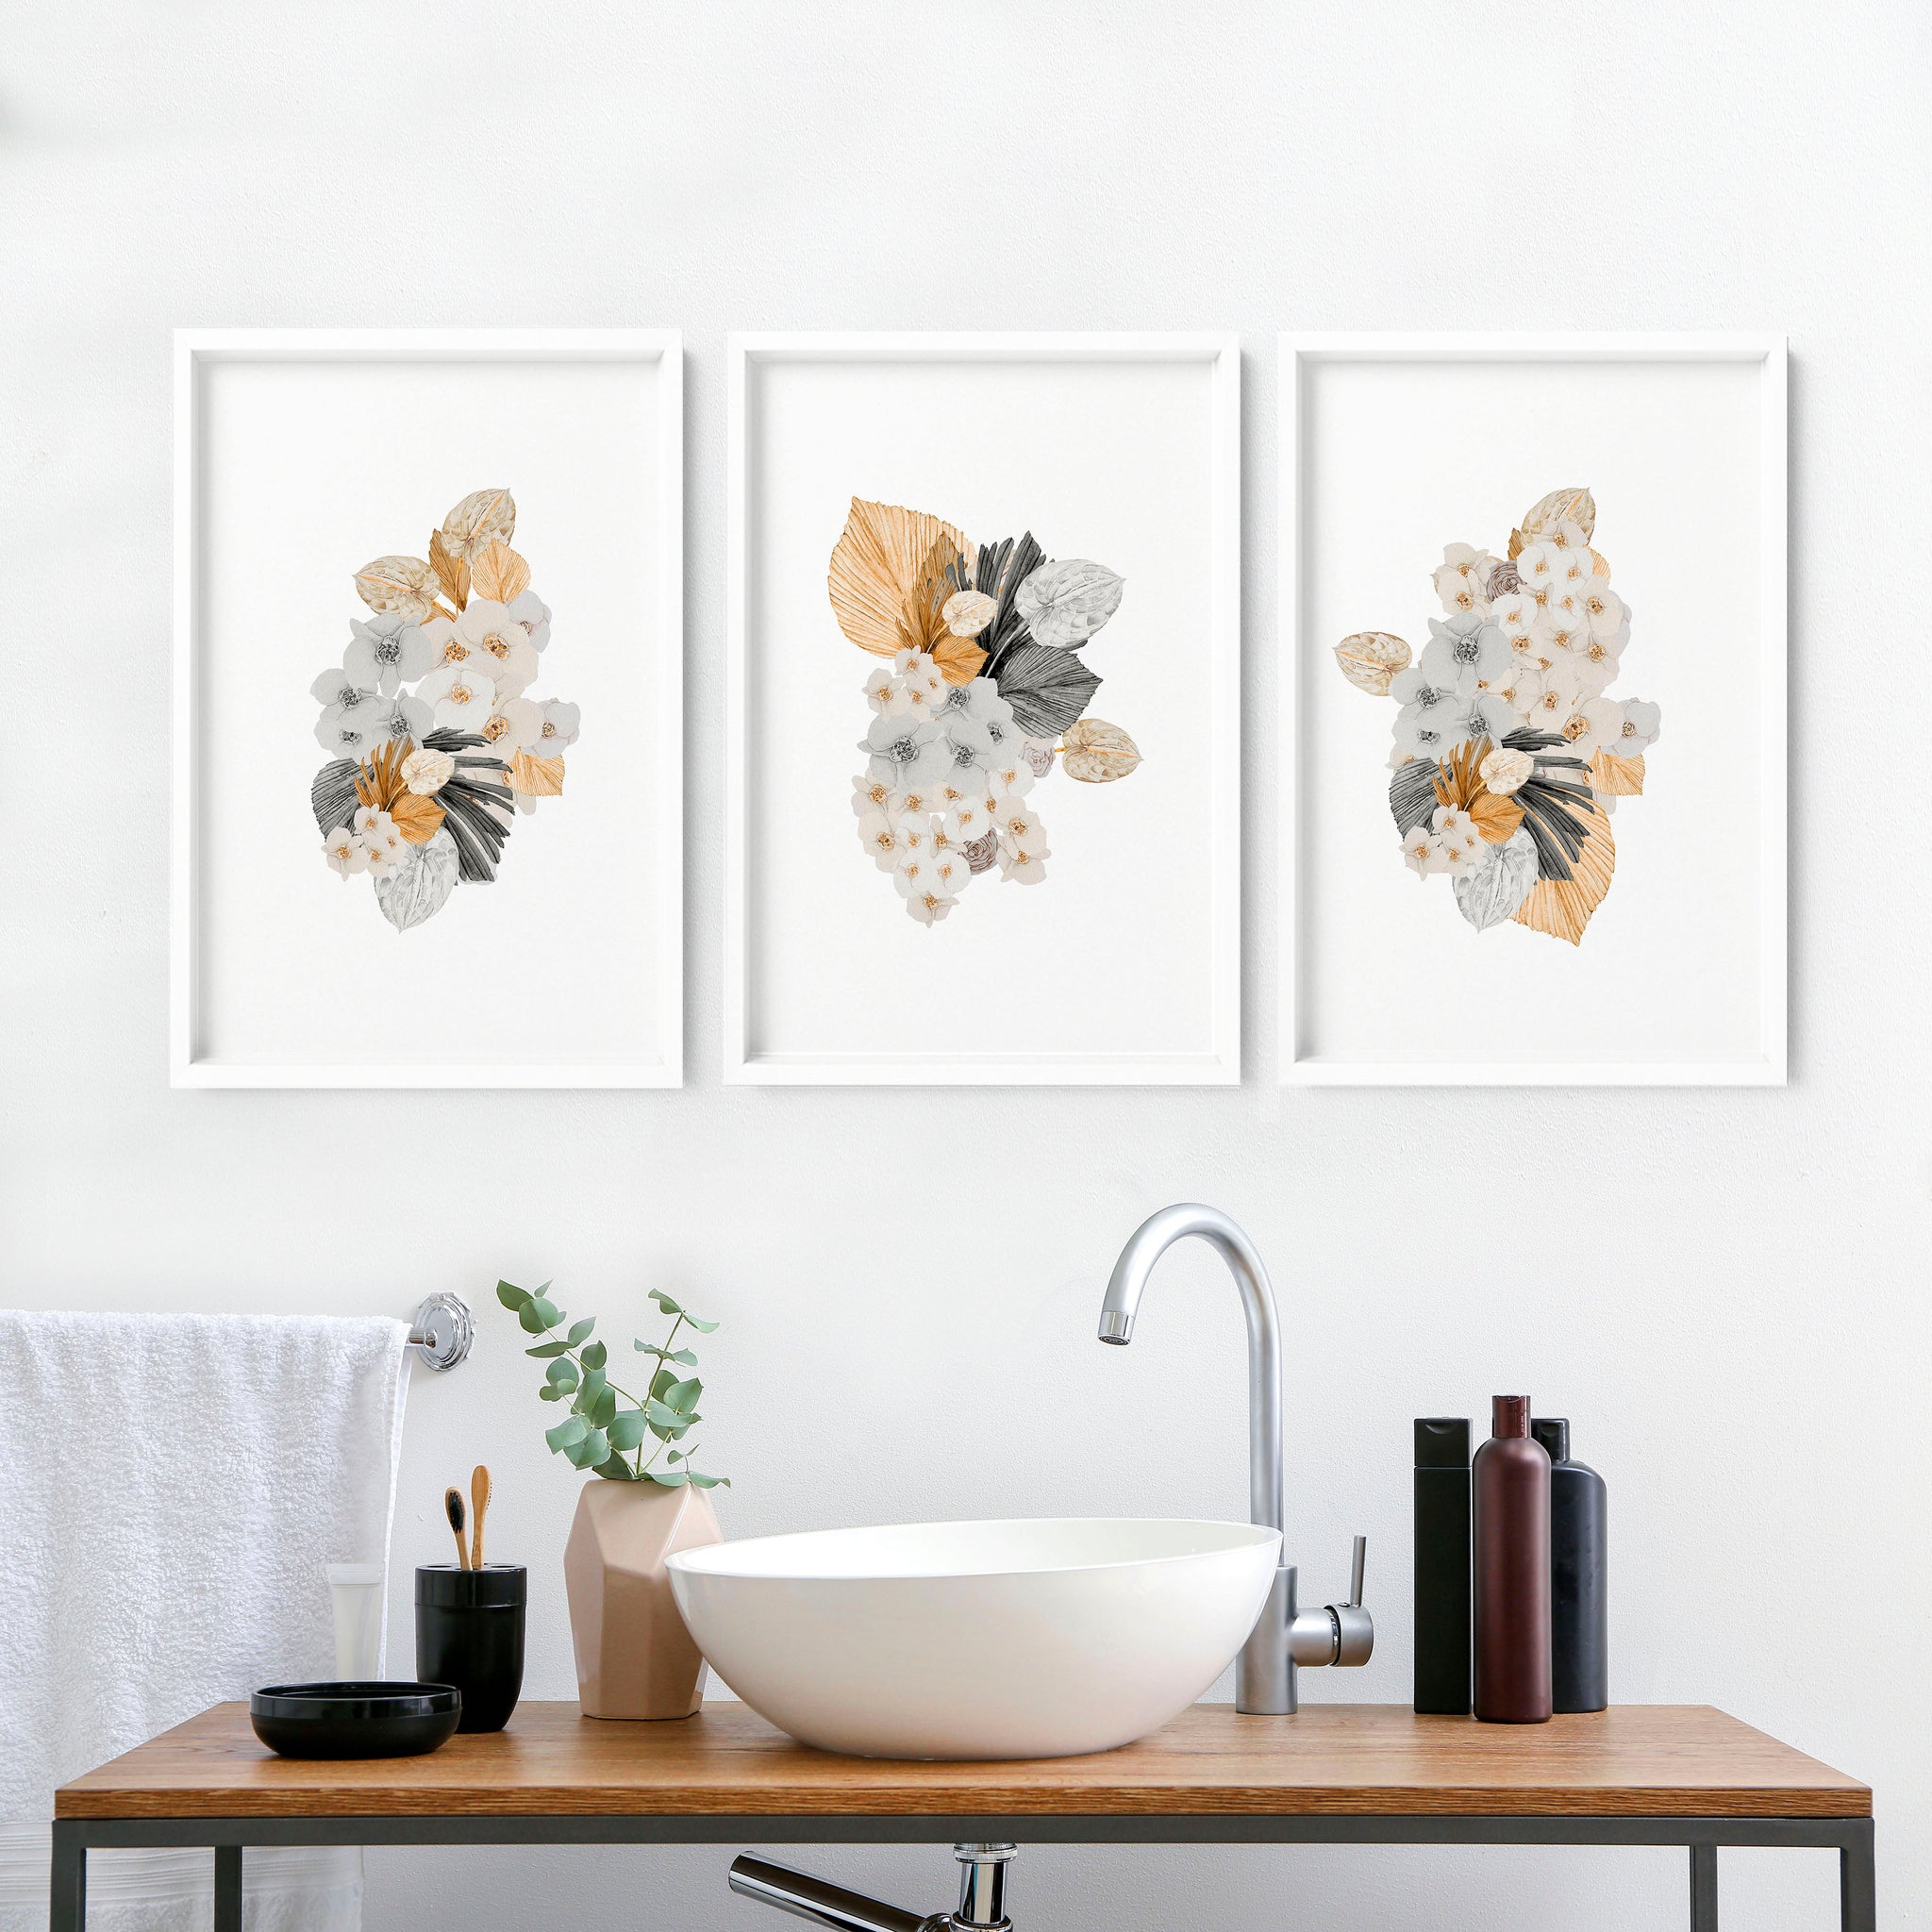 Peach Shabby Chic prints for bathroom | set of 3 wall art